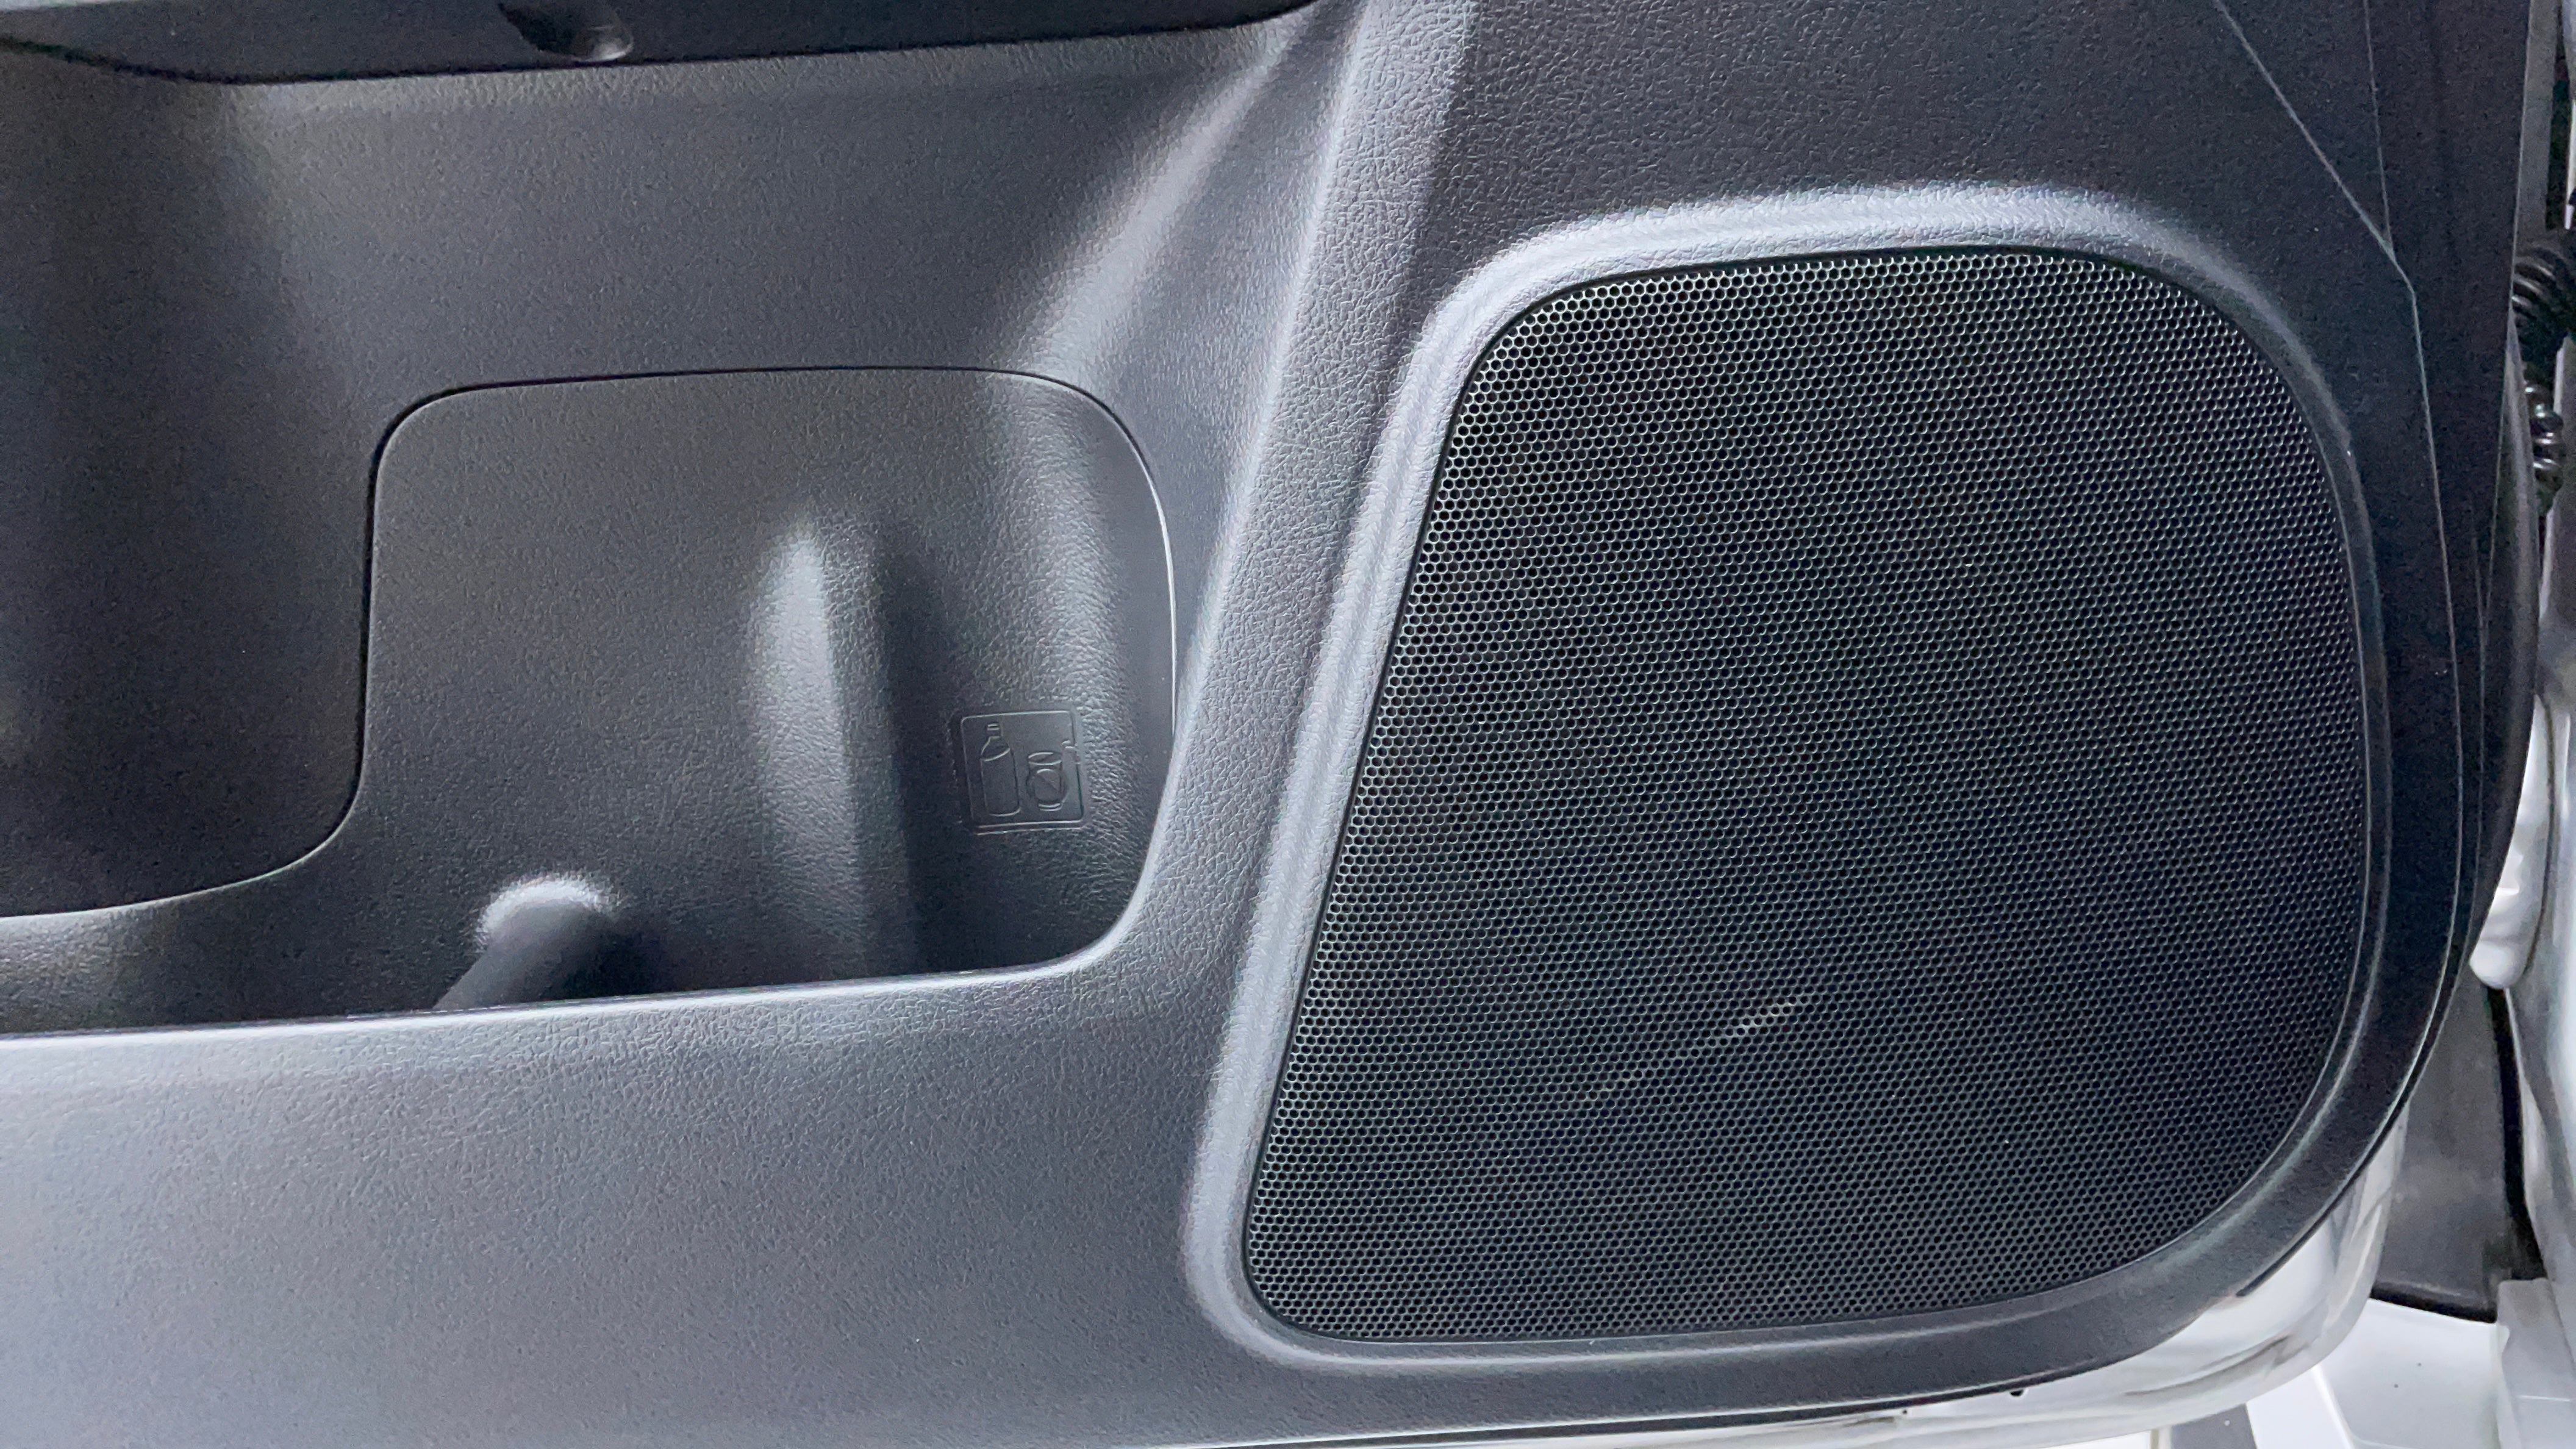 Toyota Prado-Speakers